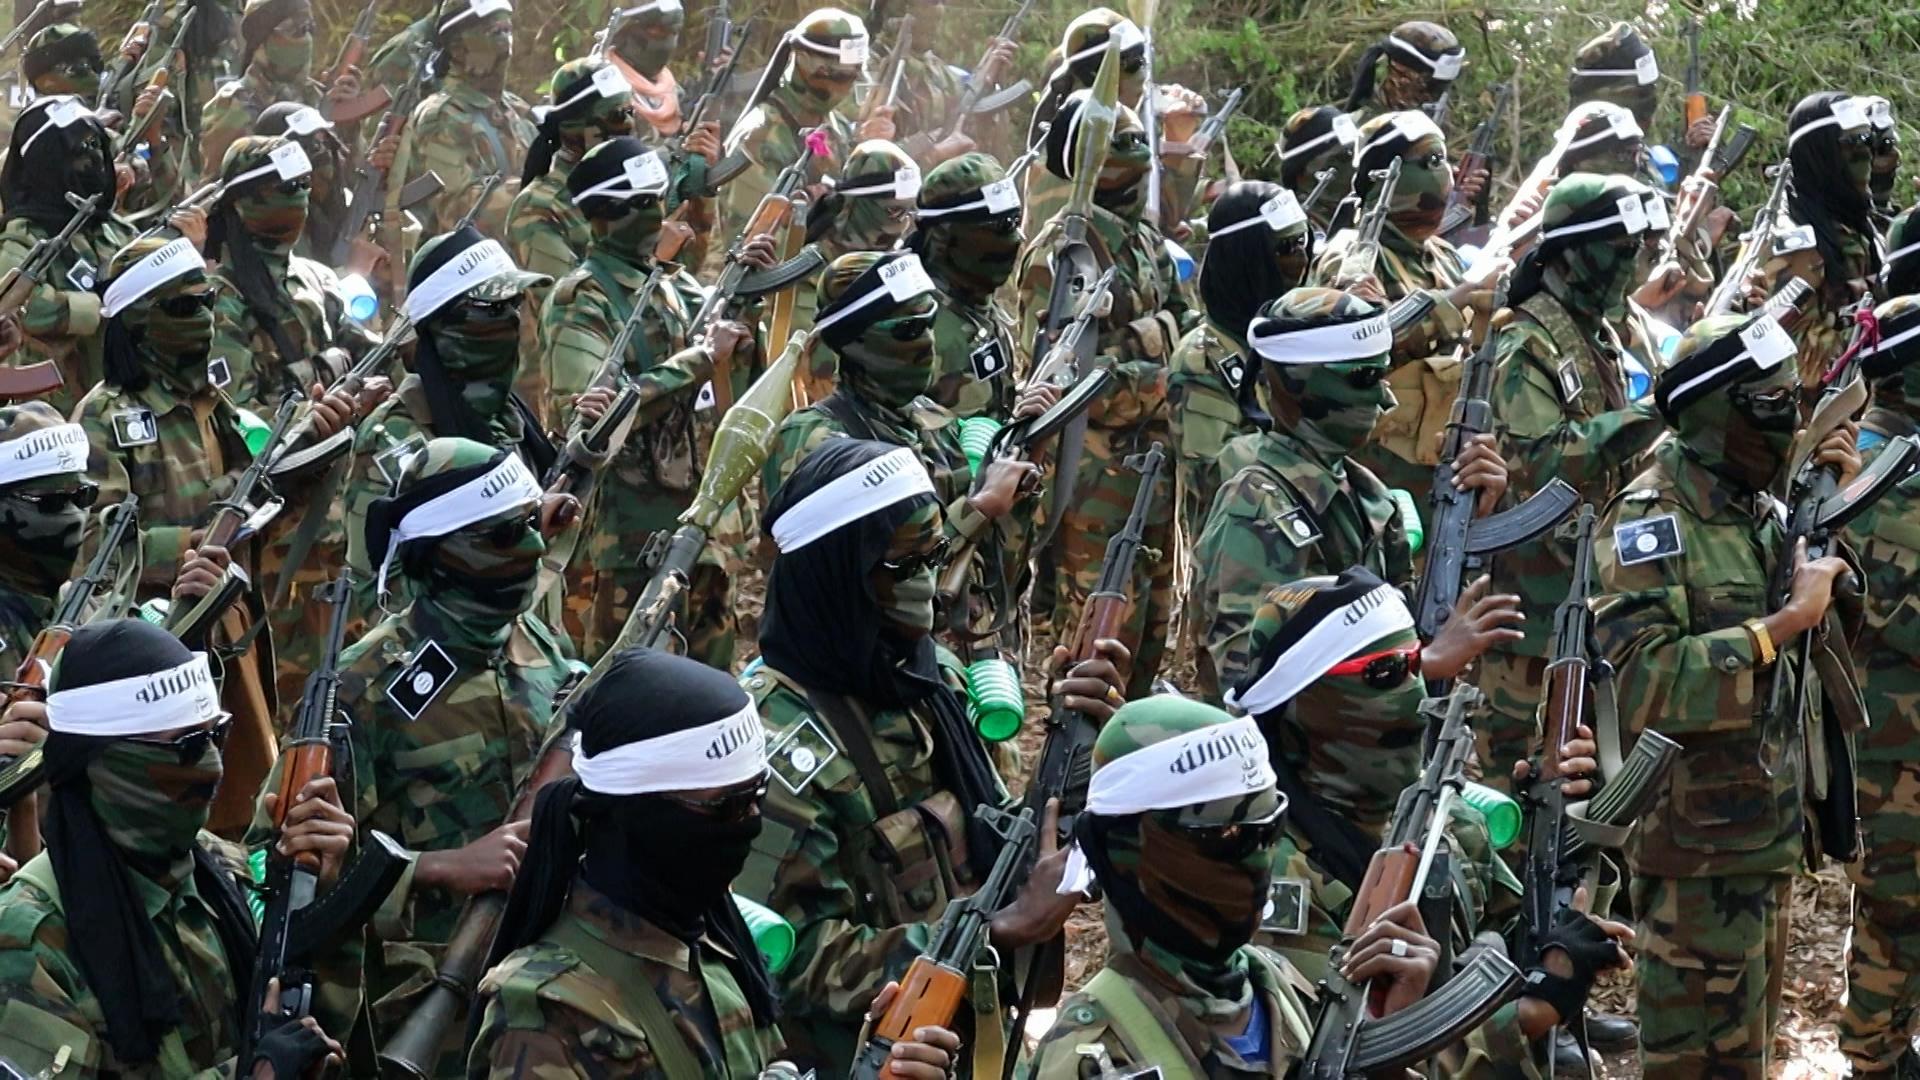 30 al-Shabaab militants killed by Somali federal forces in Juba operation.